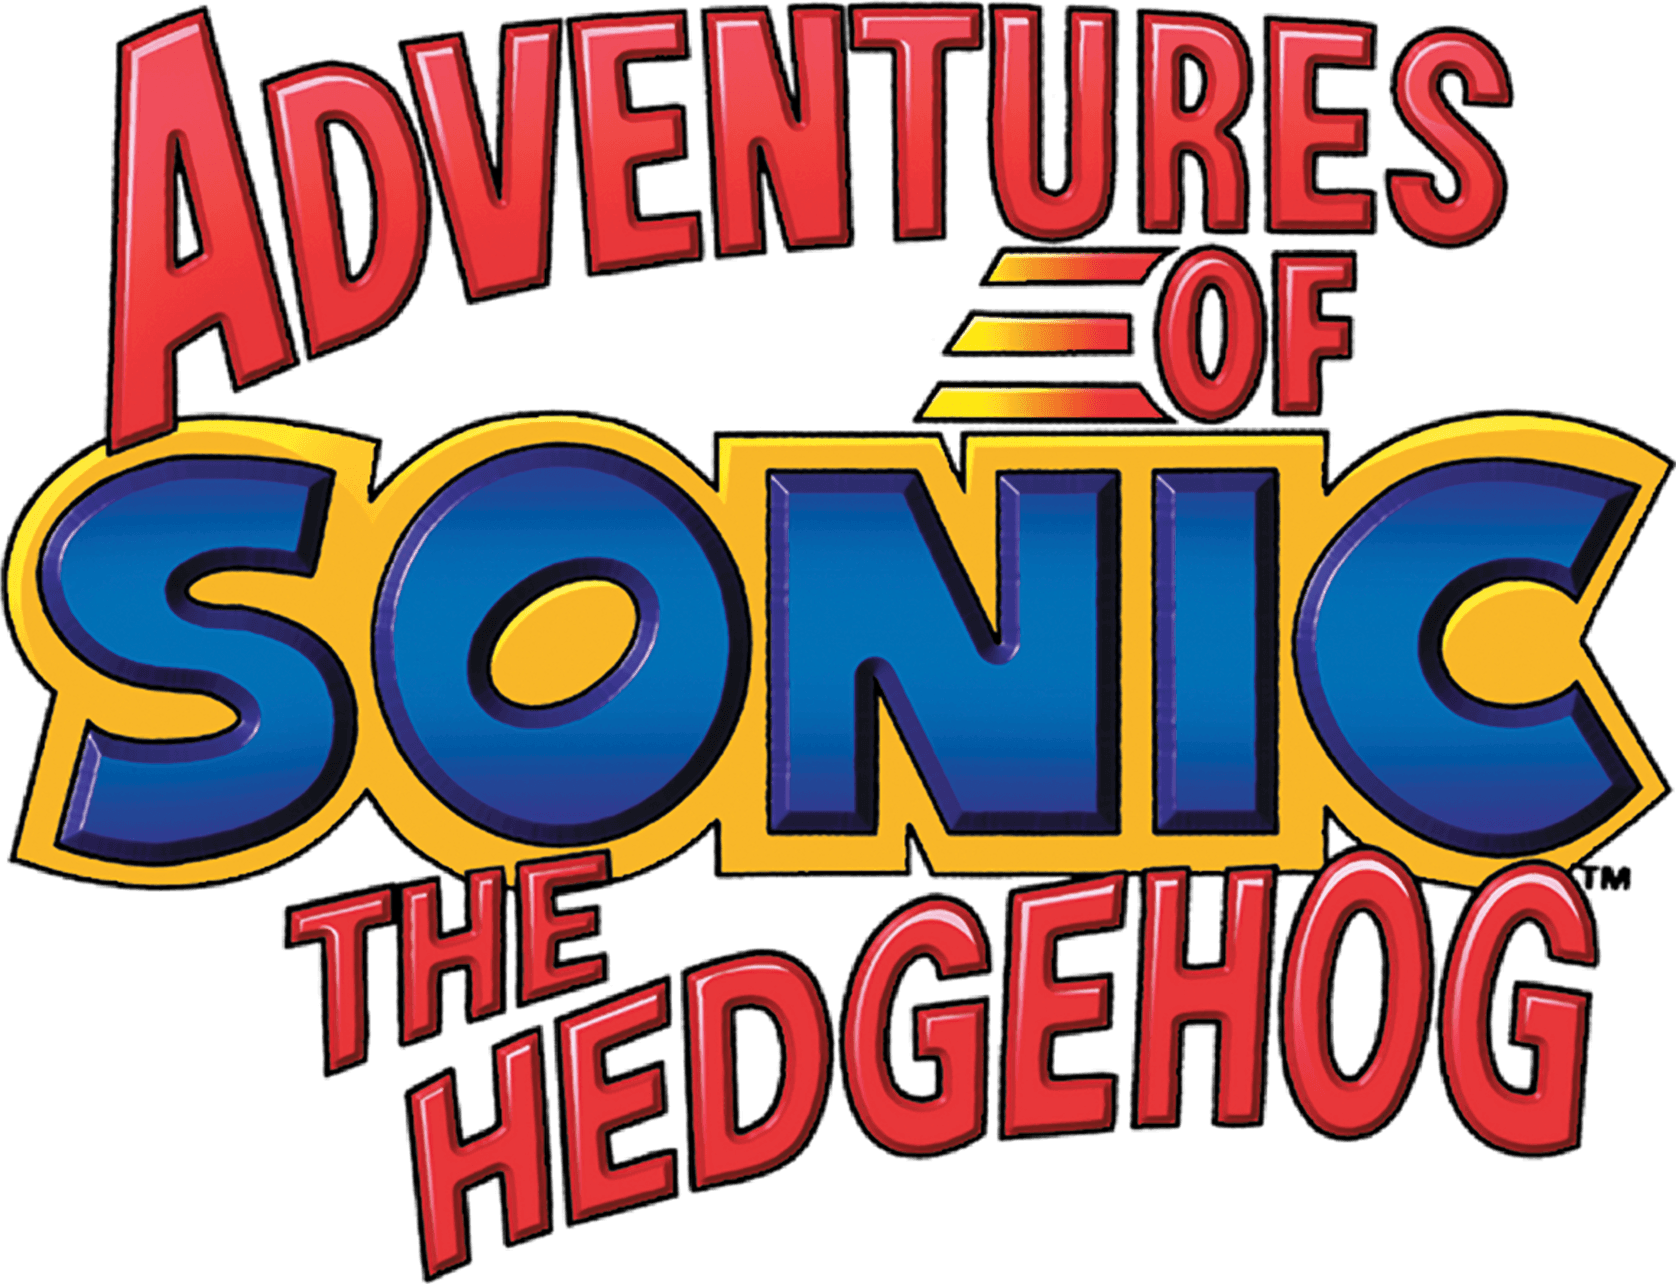 Adventures of Sonic the Hedgehog logo